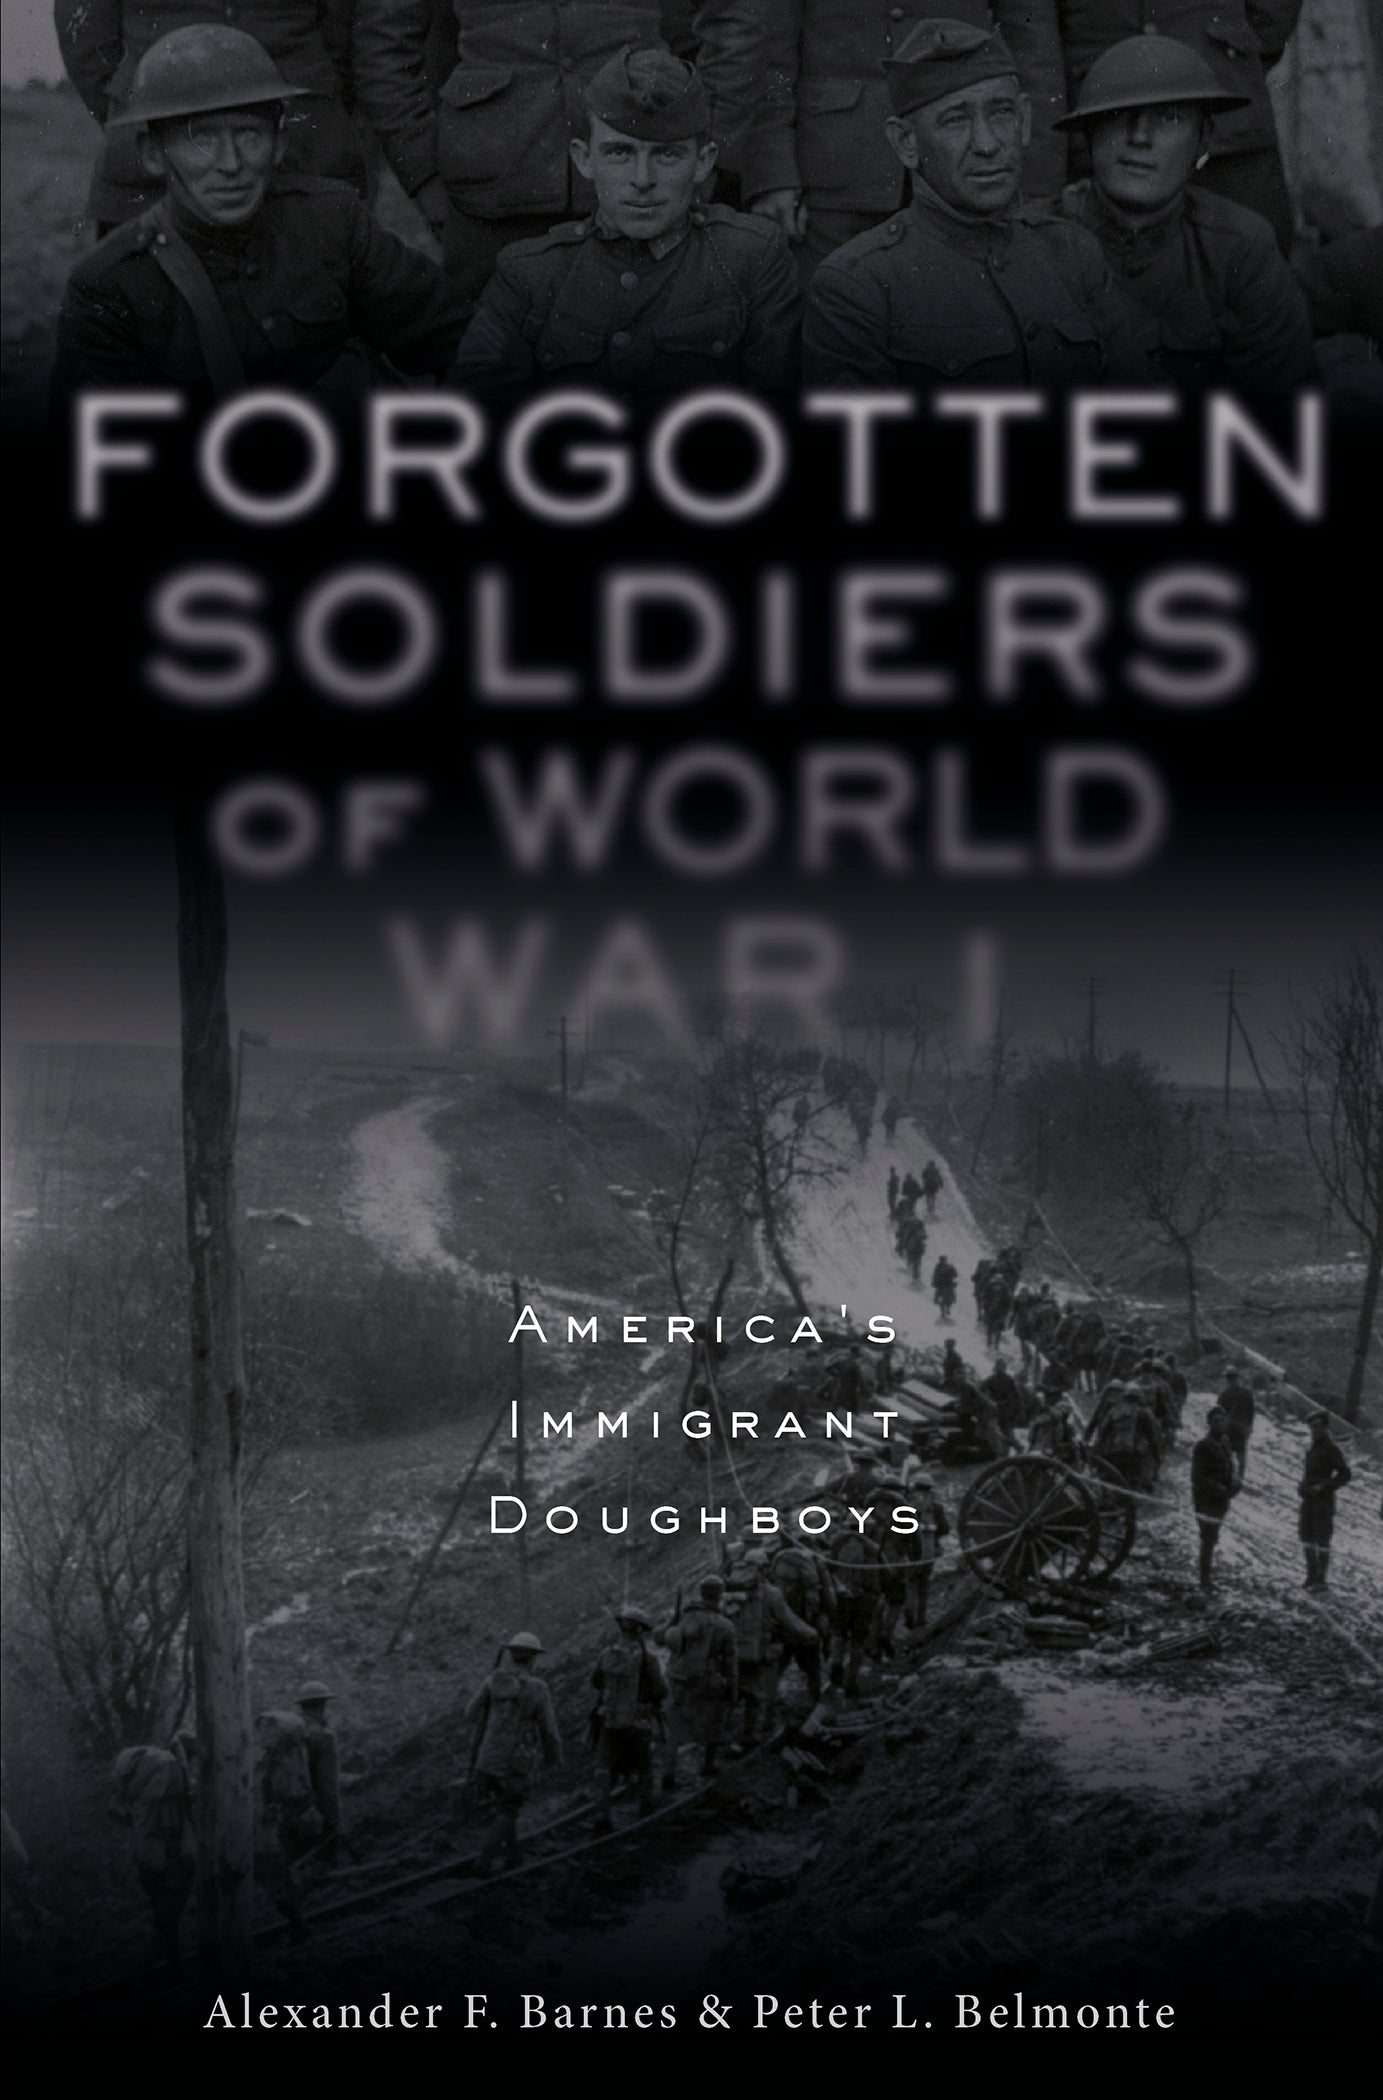 Forgotten Soldiers of World War I